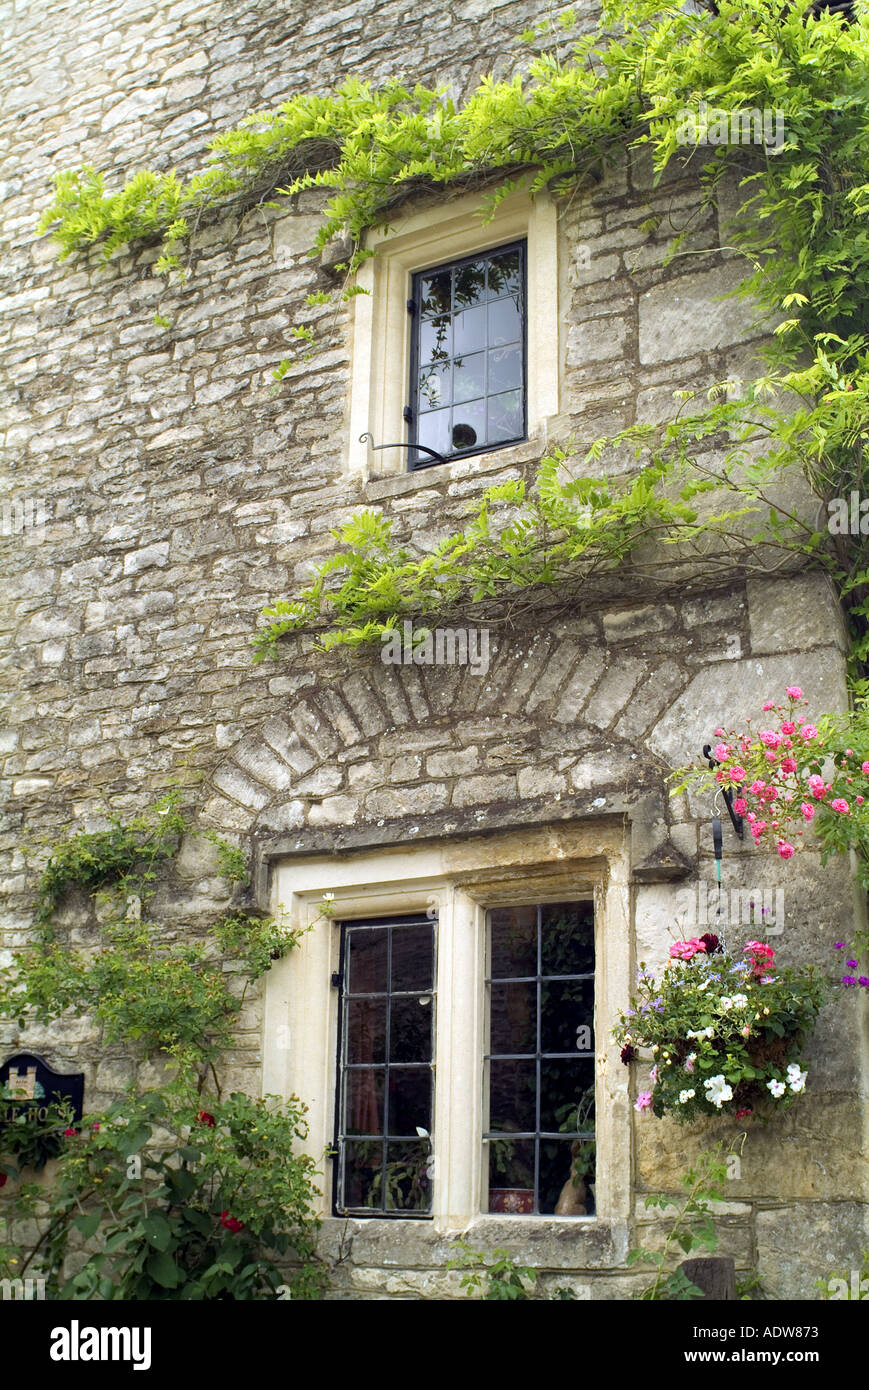 UK England Cotswolds Wiltshire Castle Coombe stone cottage with stone mullion leaded windows JMH0422 Stock Photo